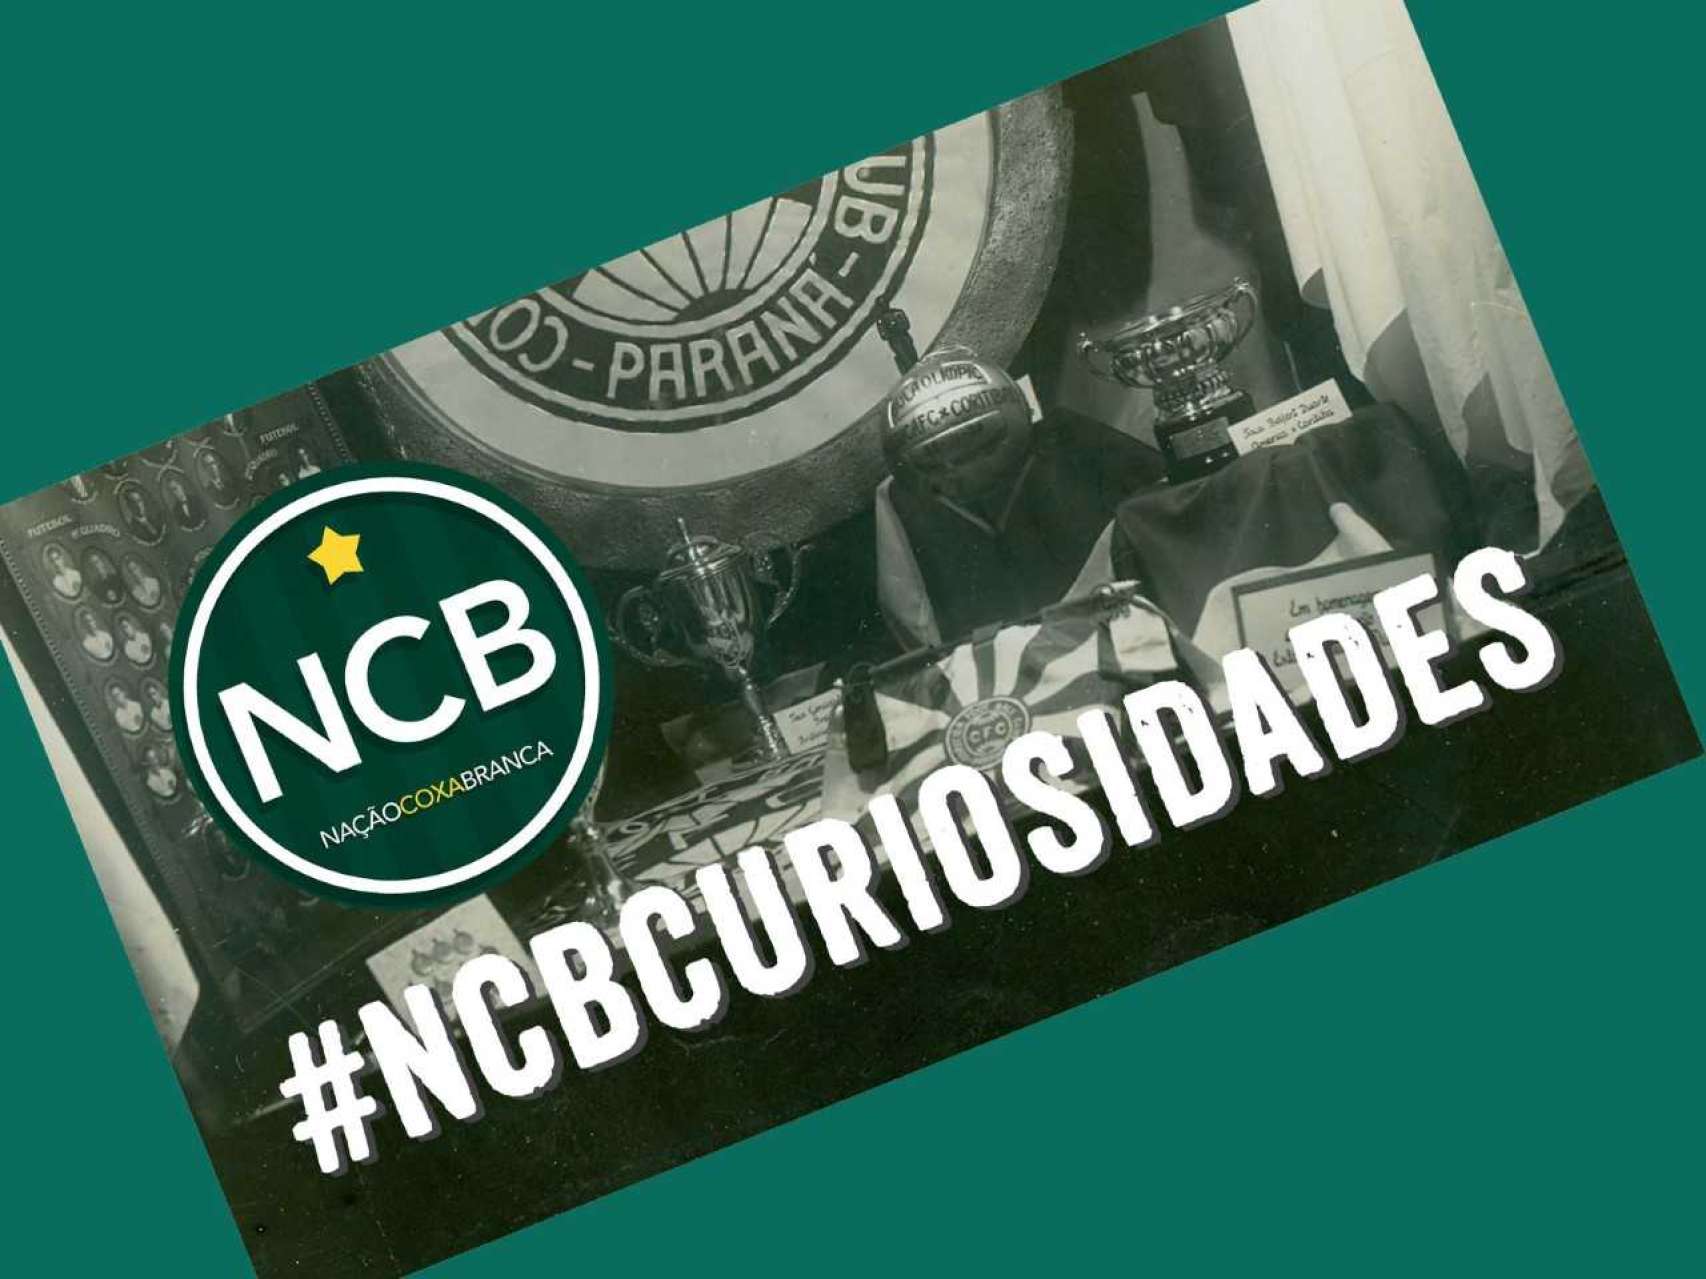 #NCBCURIOSIDADES